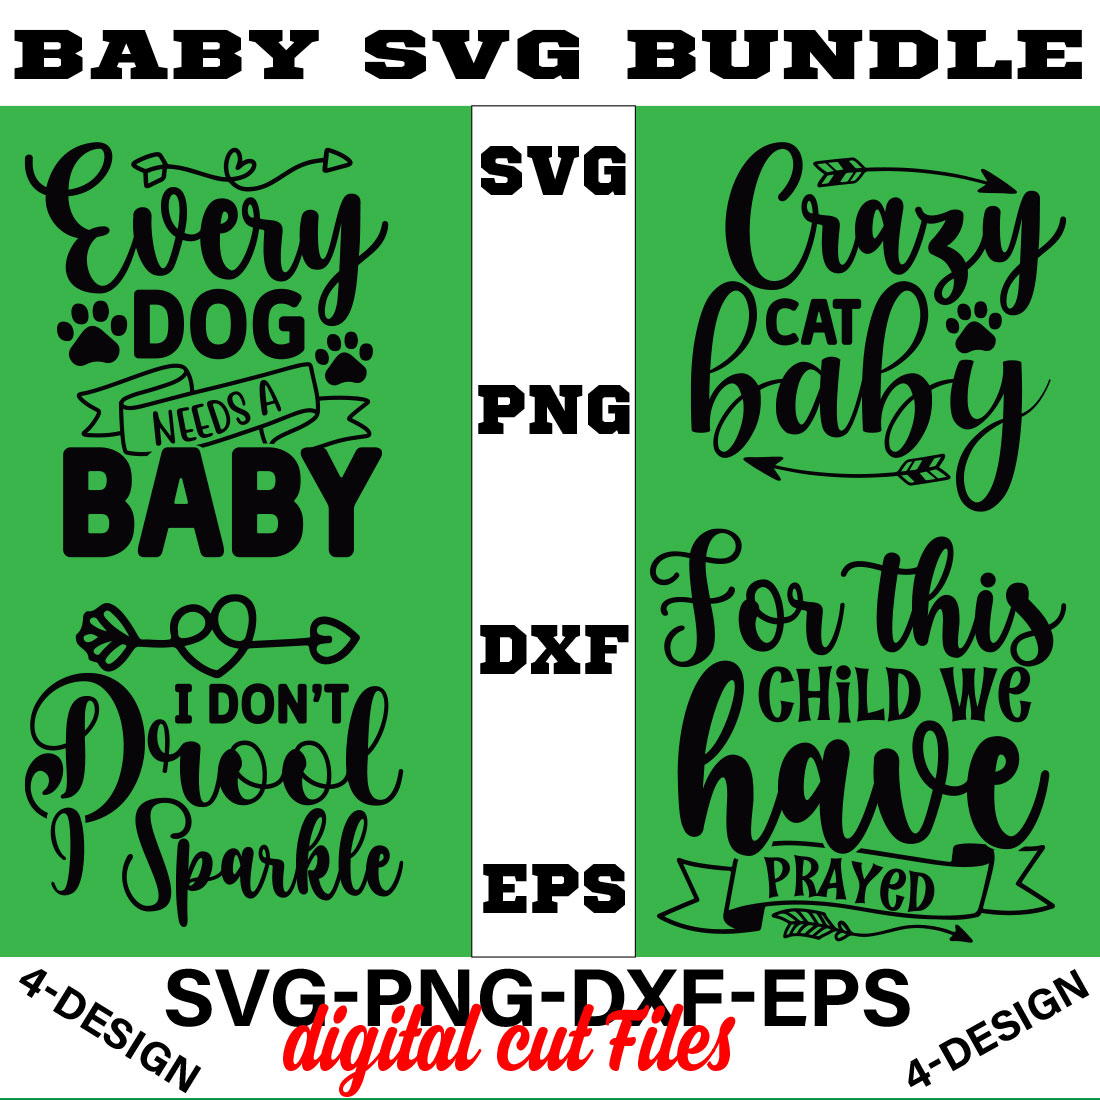 Baby SVG Bundle, Baby Shower SVG, Newborn SVG Bundle, Baby Quote Bundle, Cute Baby Saying svg, Funny Baby svg, Baby Boy Girl Svg, Png Vol-01 cover image.